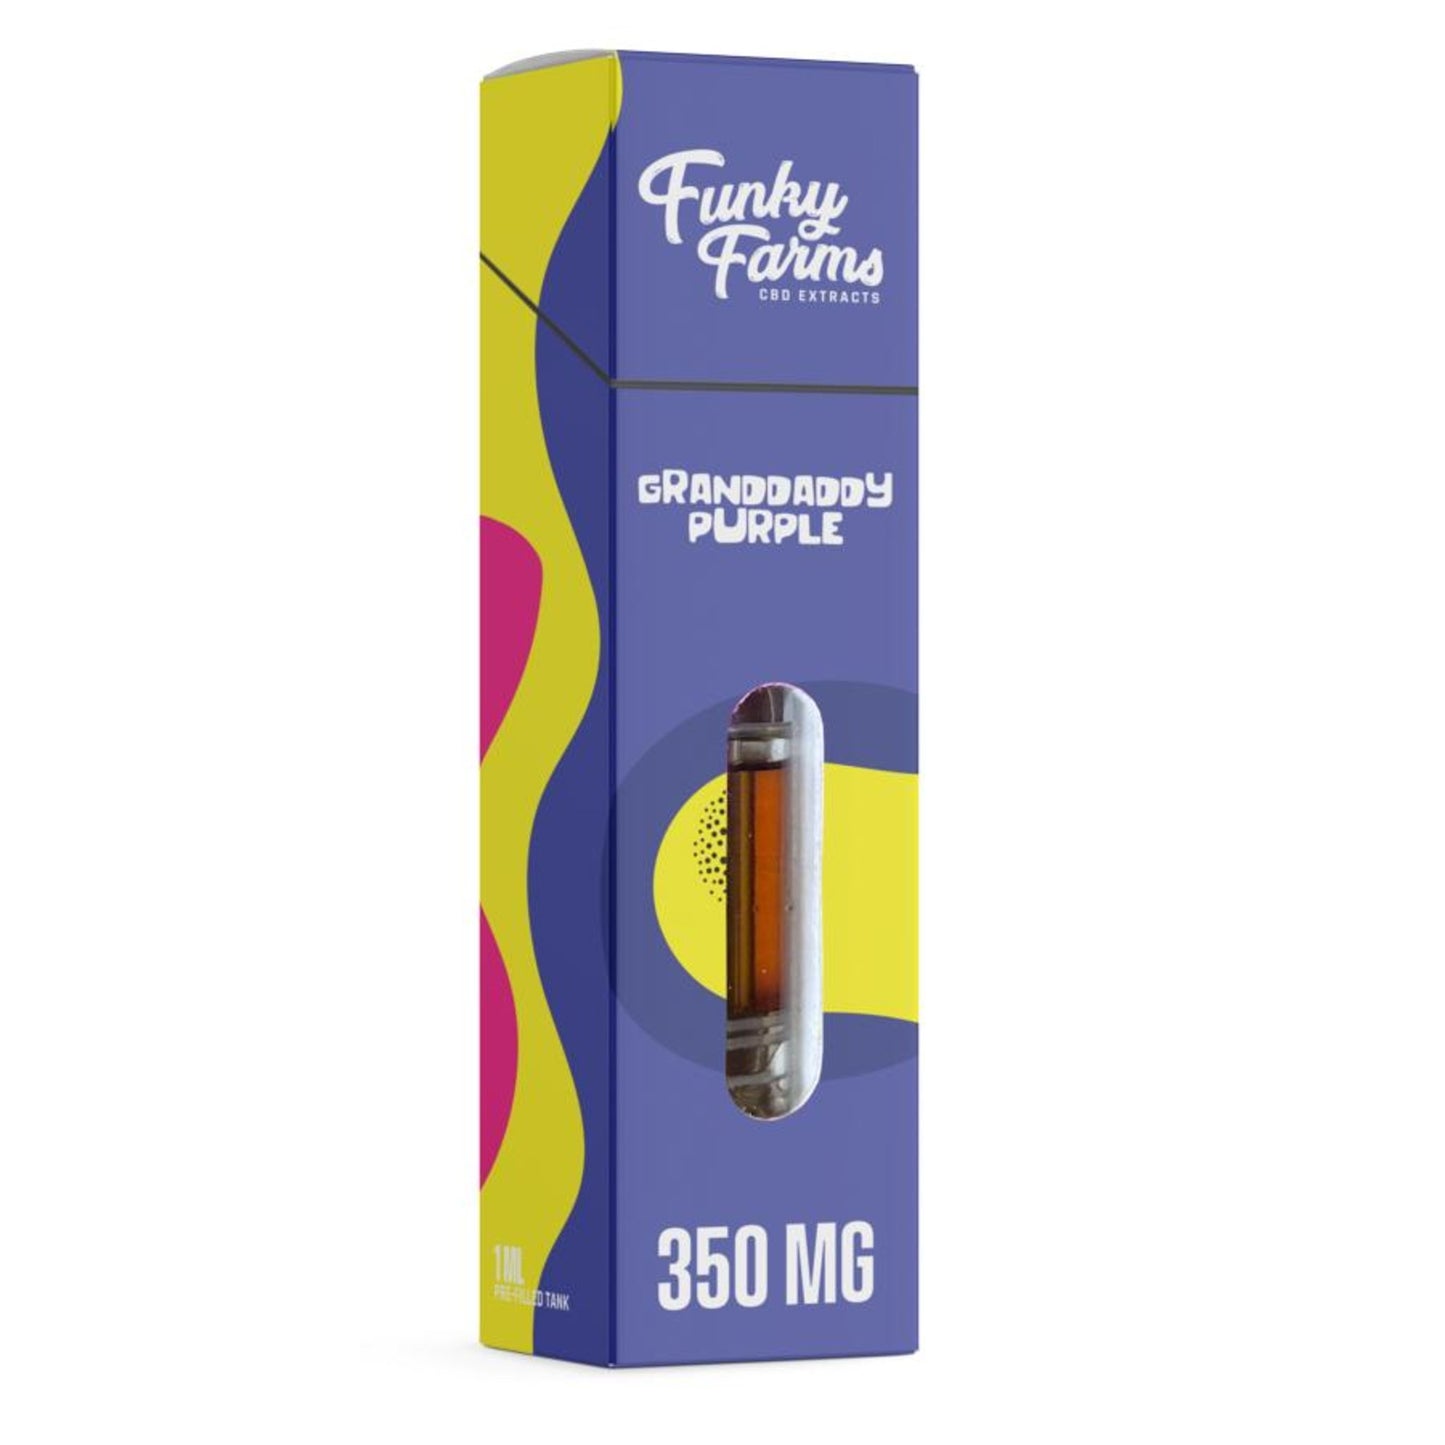 Funky Farms CBD Pre-Filled Cartridges - 350mg 350mg / Granddaddy Purple